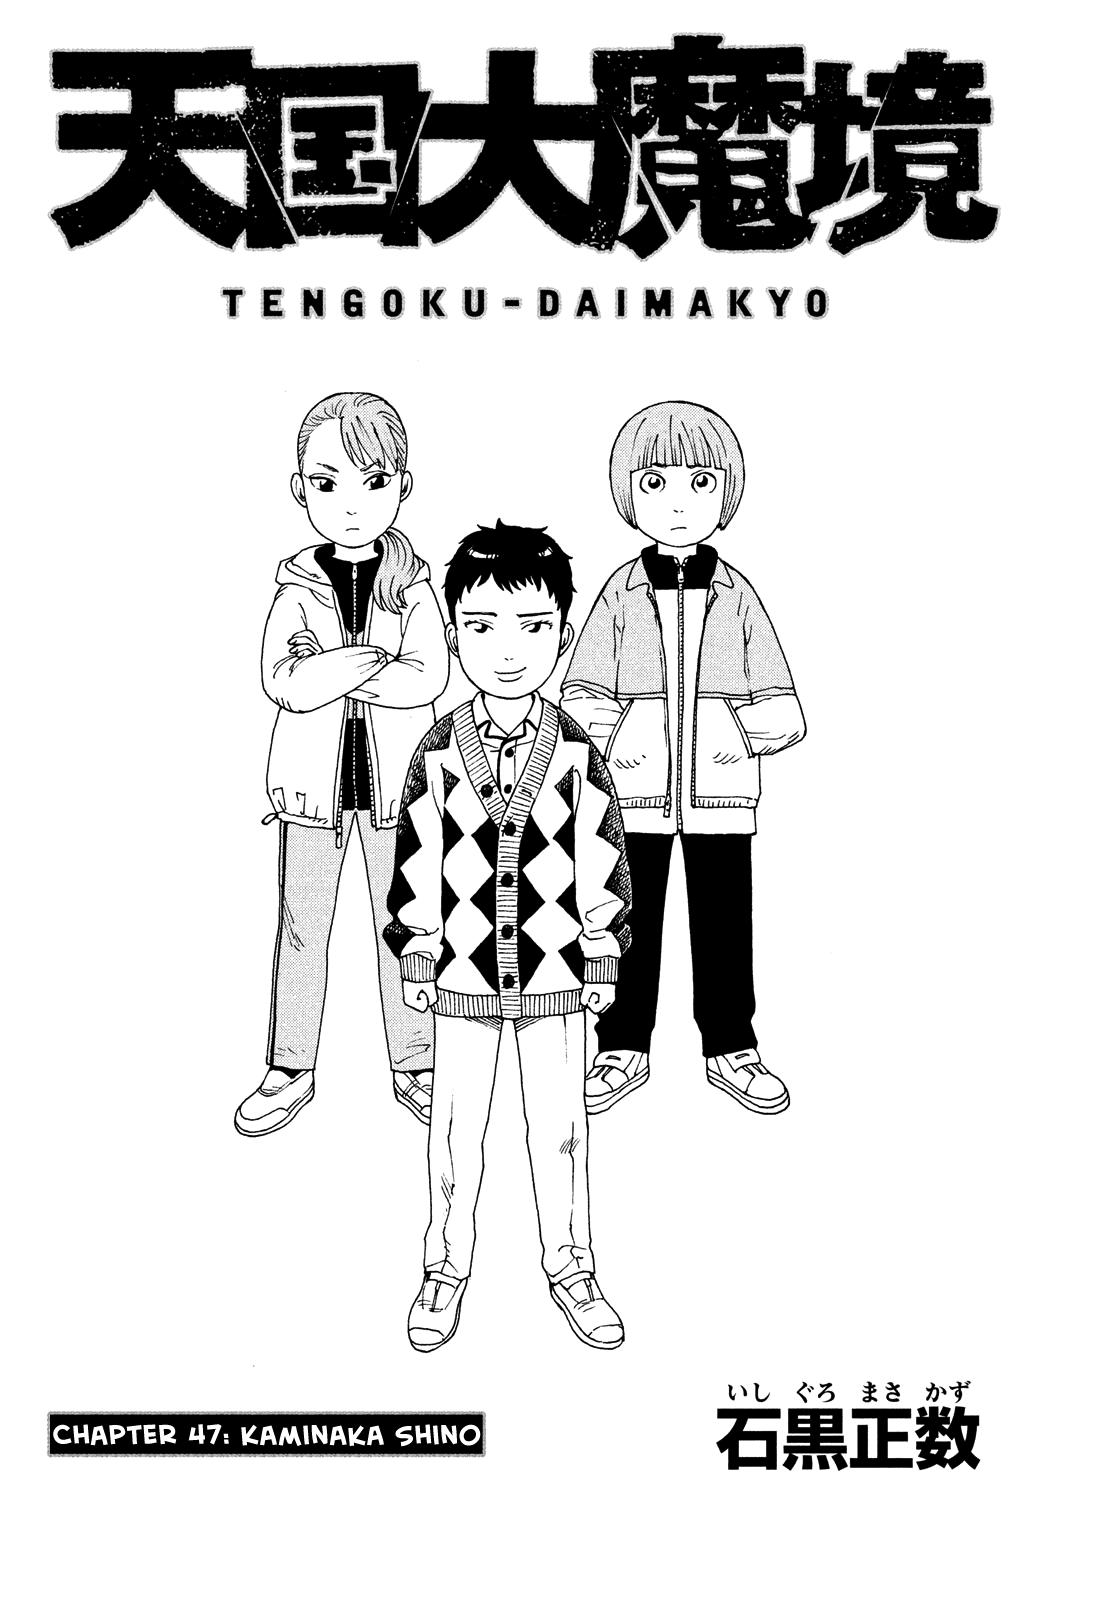 Read Tengoku Daimakyou Vol.9 Chapter 52: Michika ➃ - Manganelo